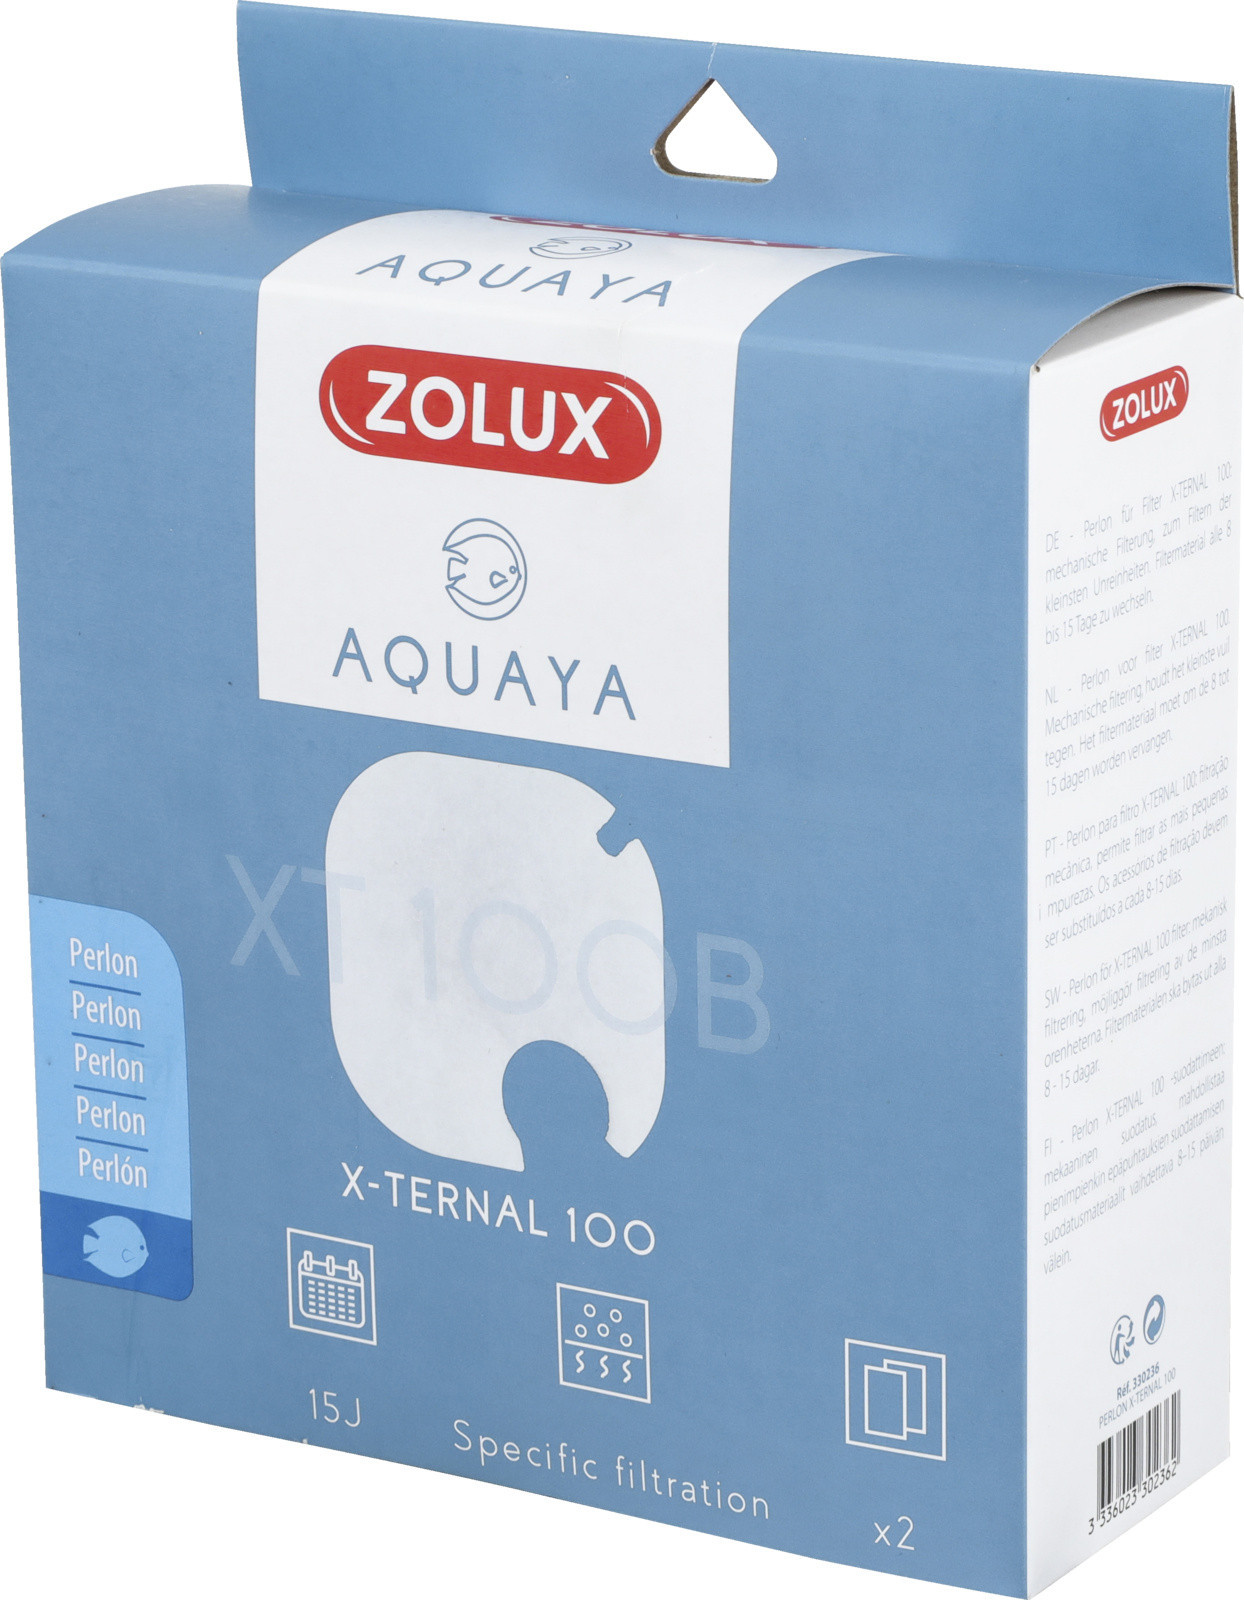 Zolux AQUAYA Wkład Perlon Xternal 100 330236